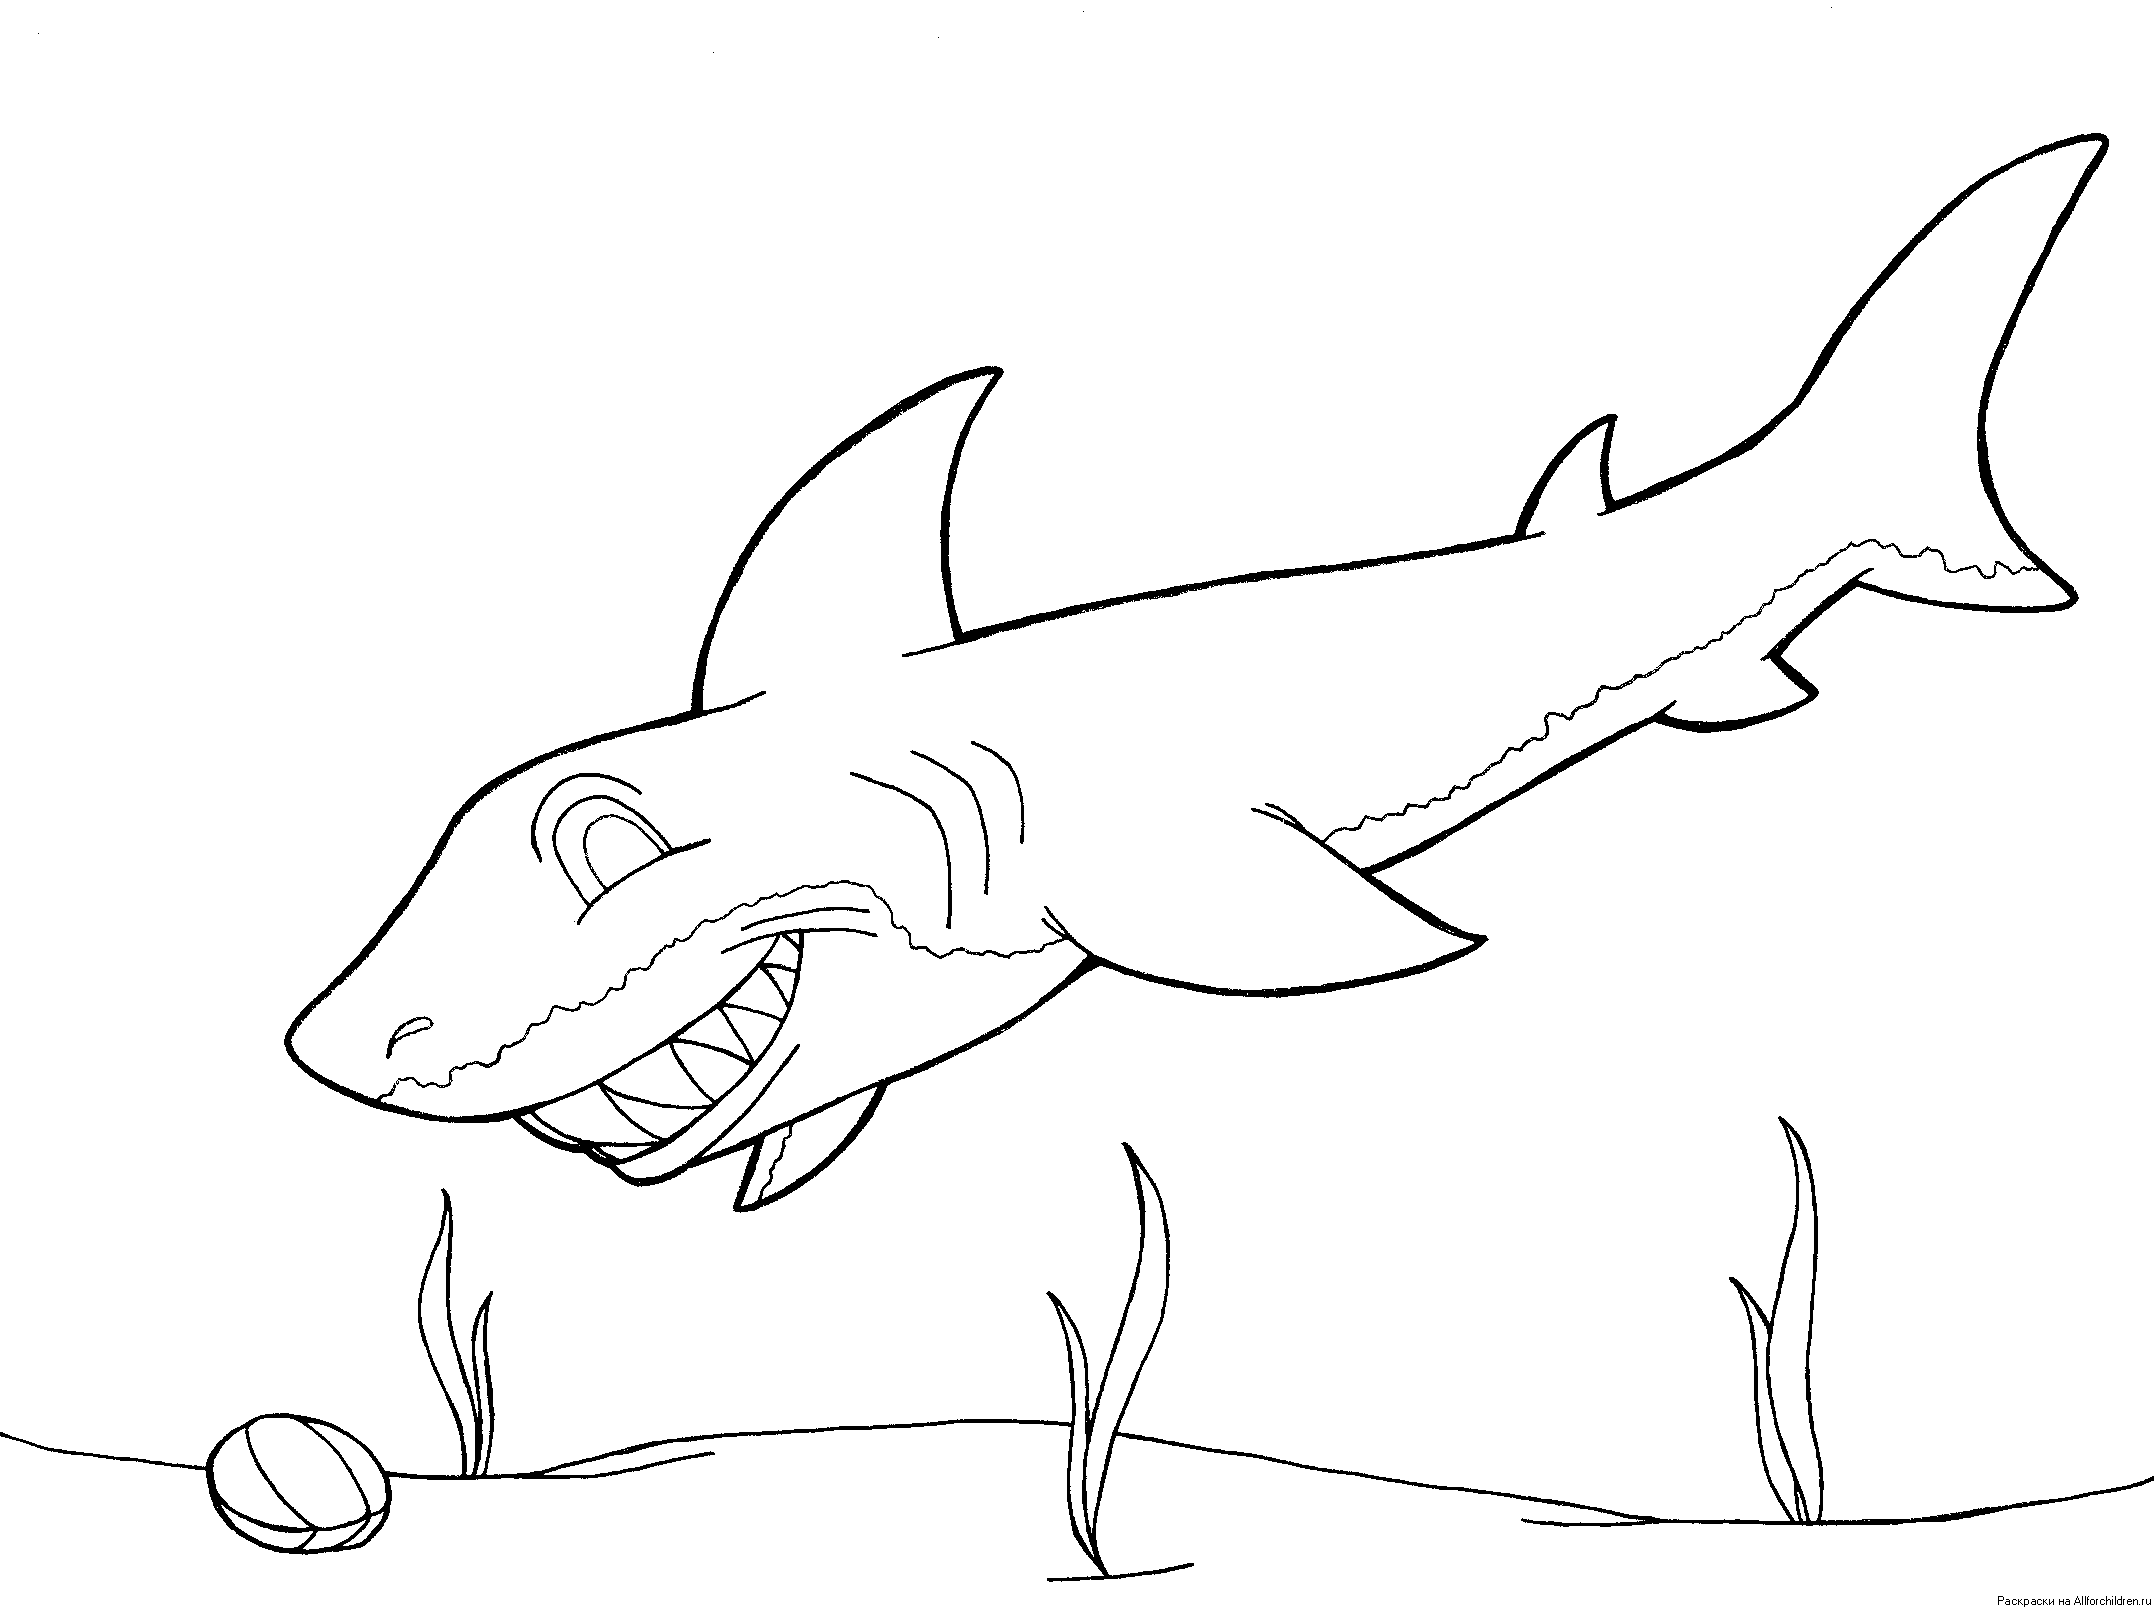 Раскраски акула. Акула раскраска. Акула раскраска для детей. Акула детская раскраска. Рыба молот раскраска для детей.